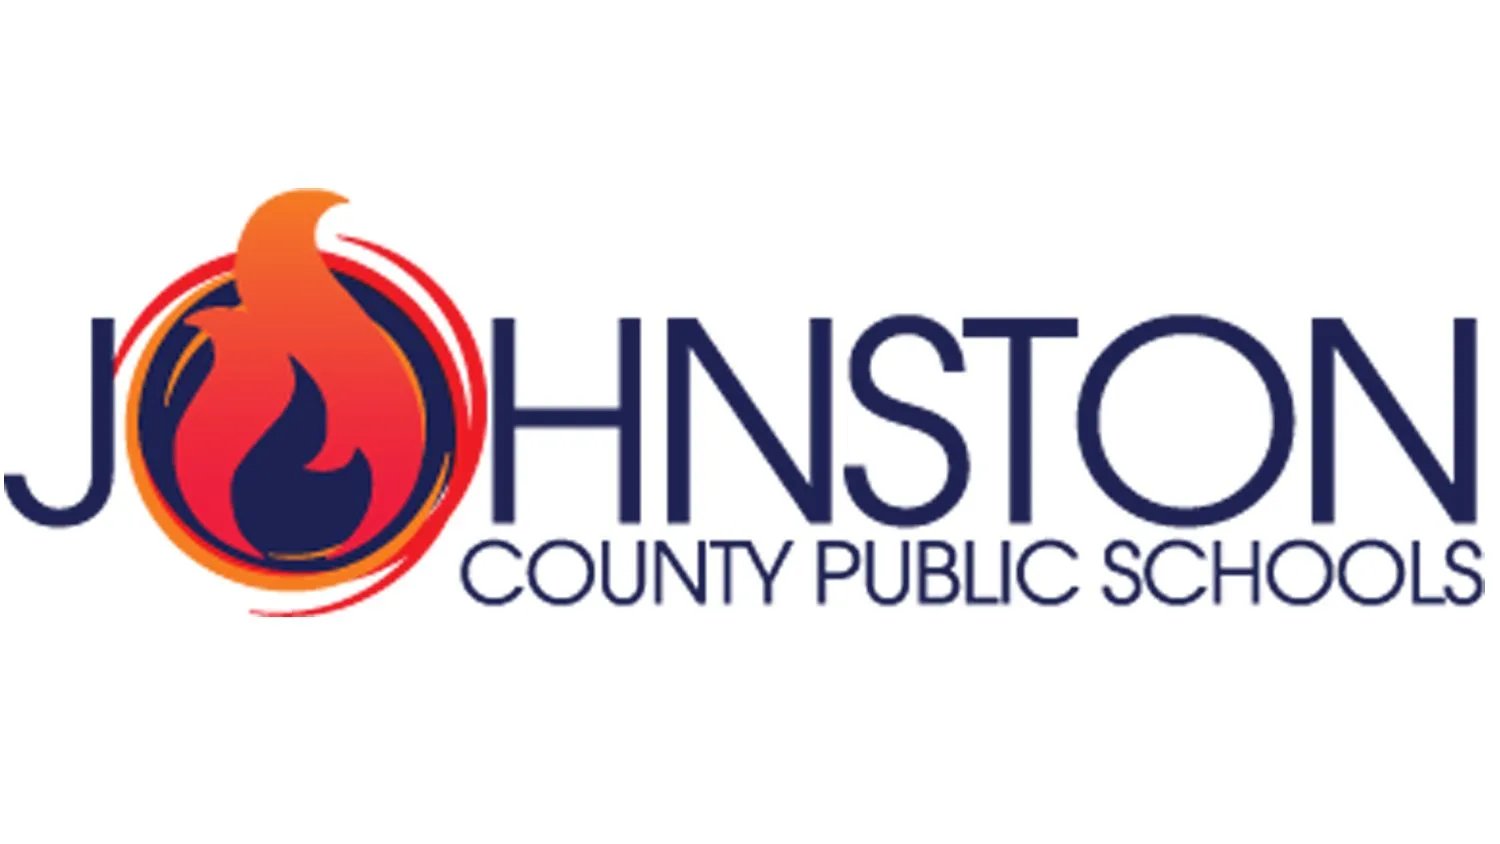 Johnston County Public Schools - Panorama Client